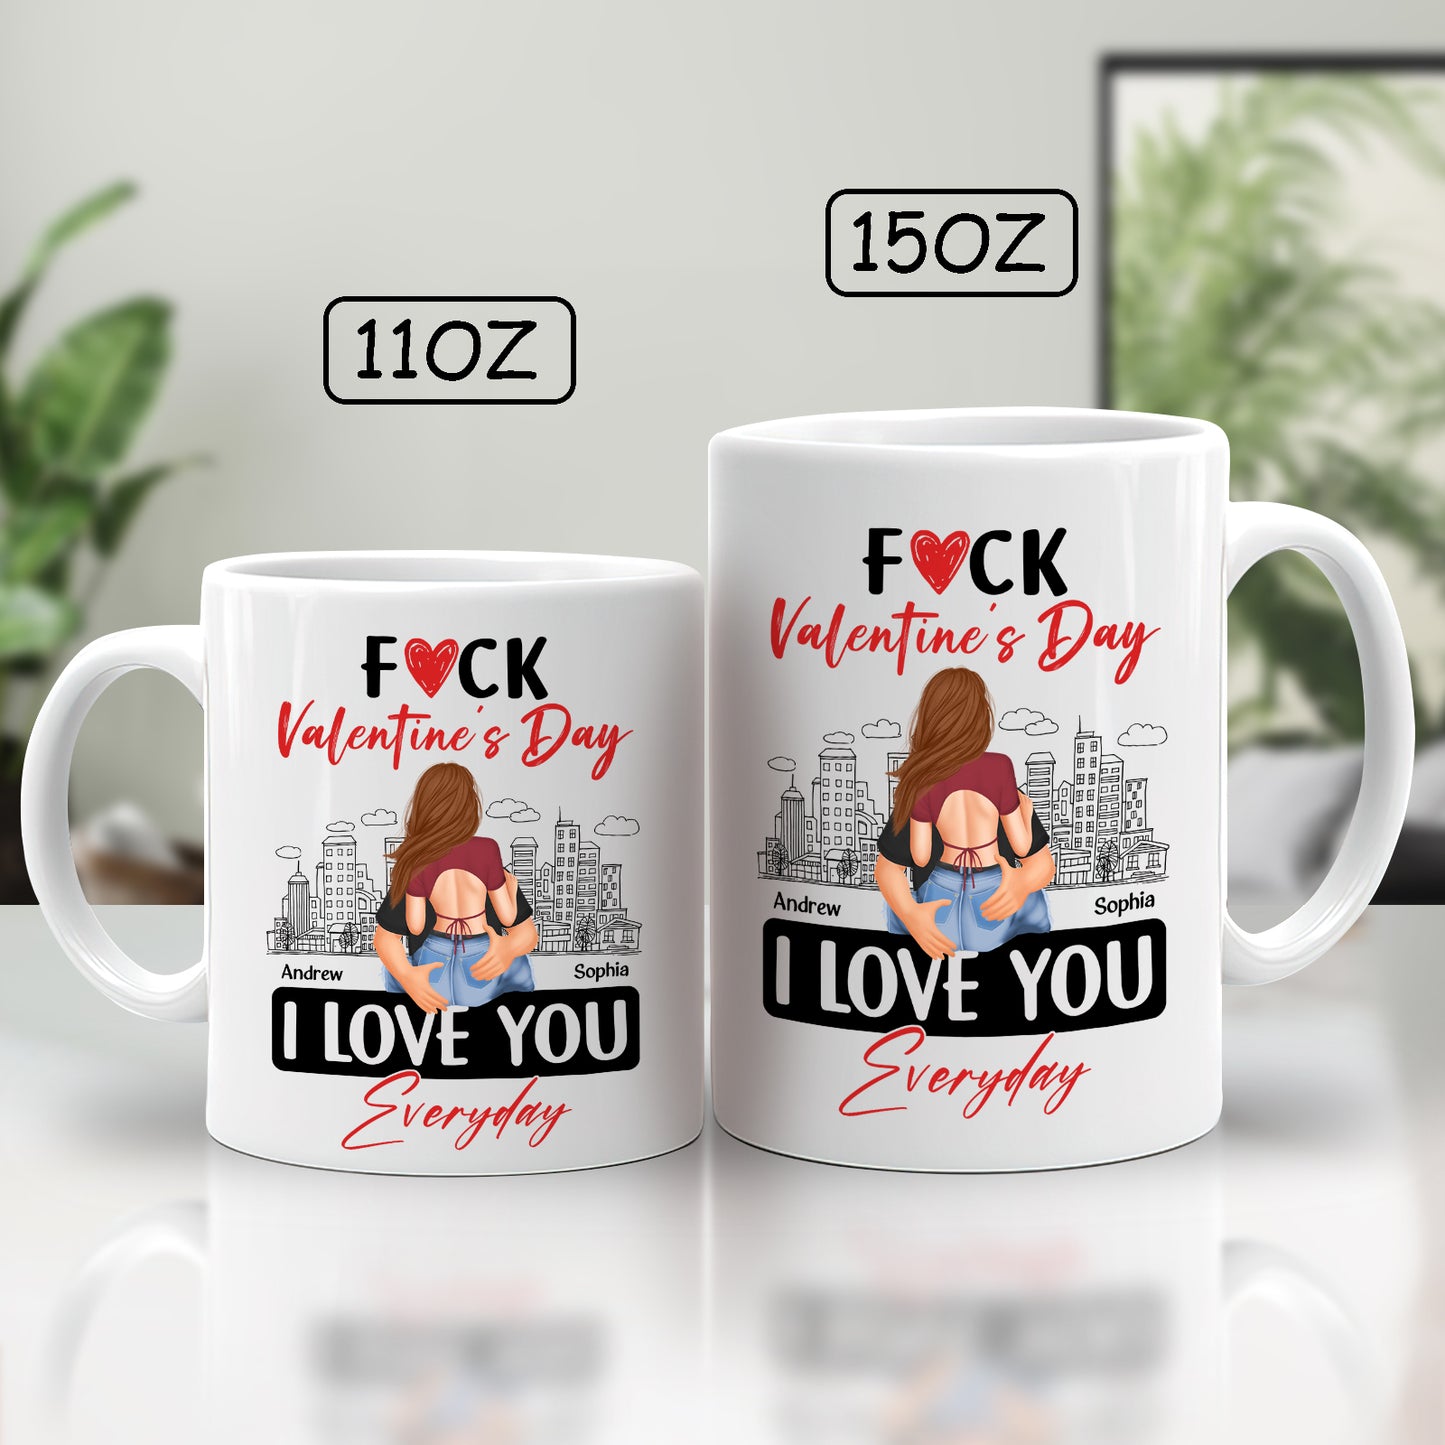 Couple - Fuck Valentine's Day, I Love You Everyday - Personalized Mug